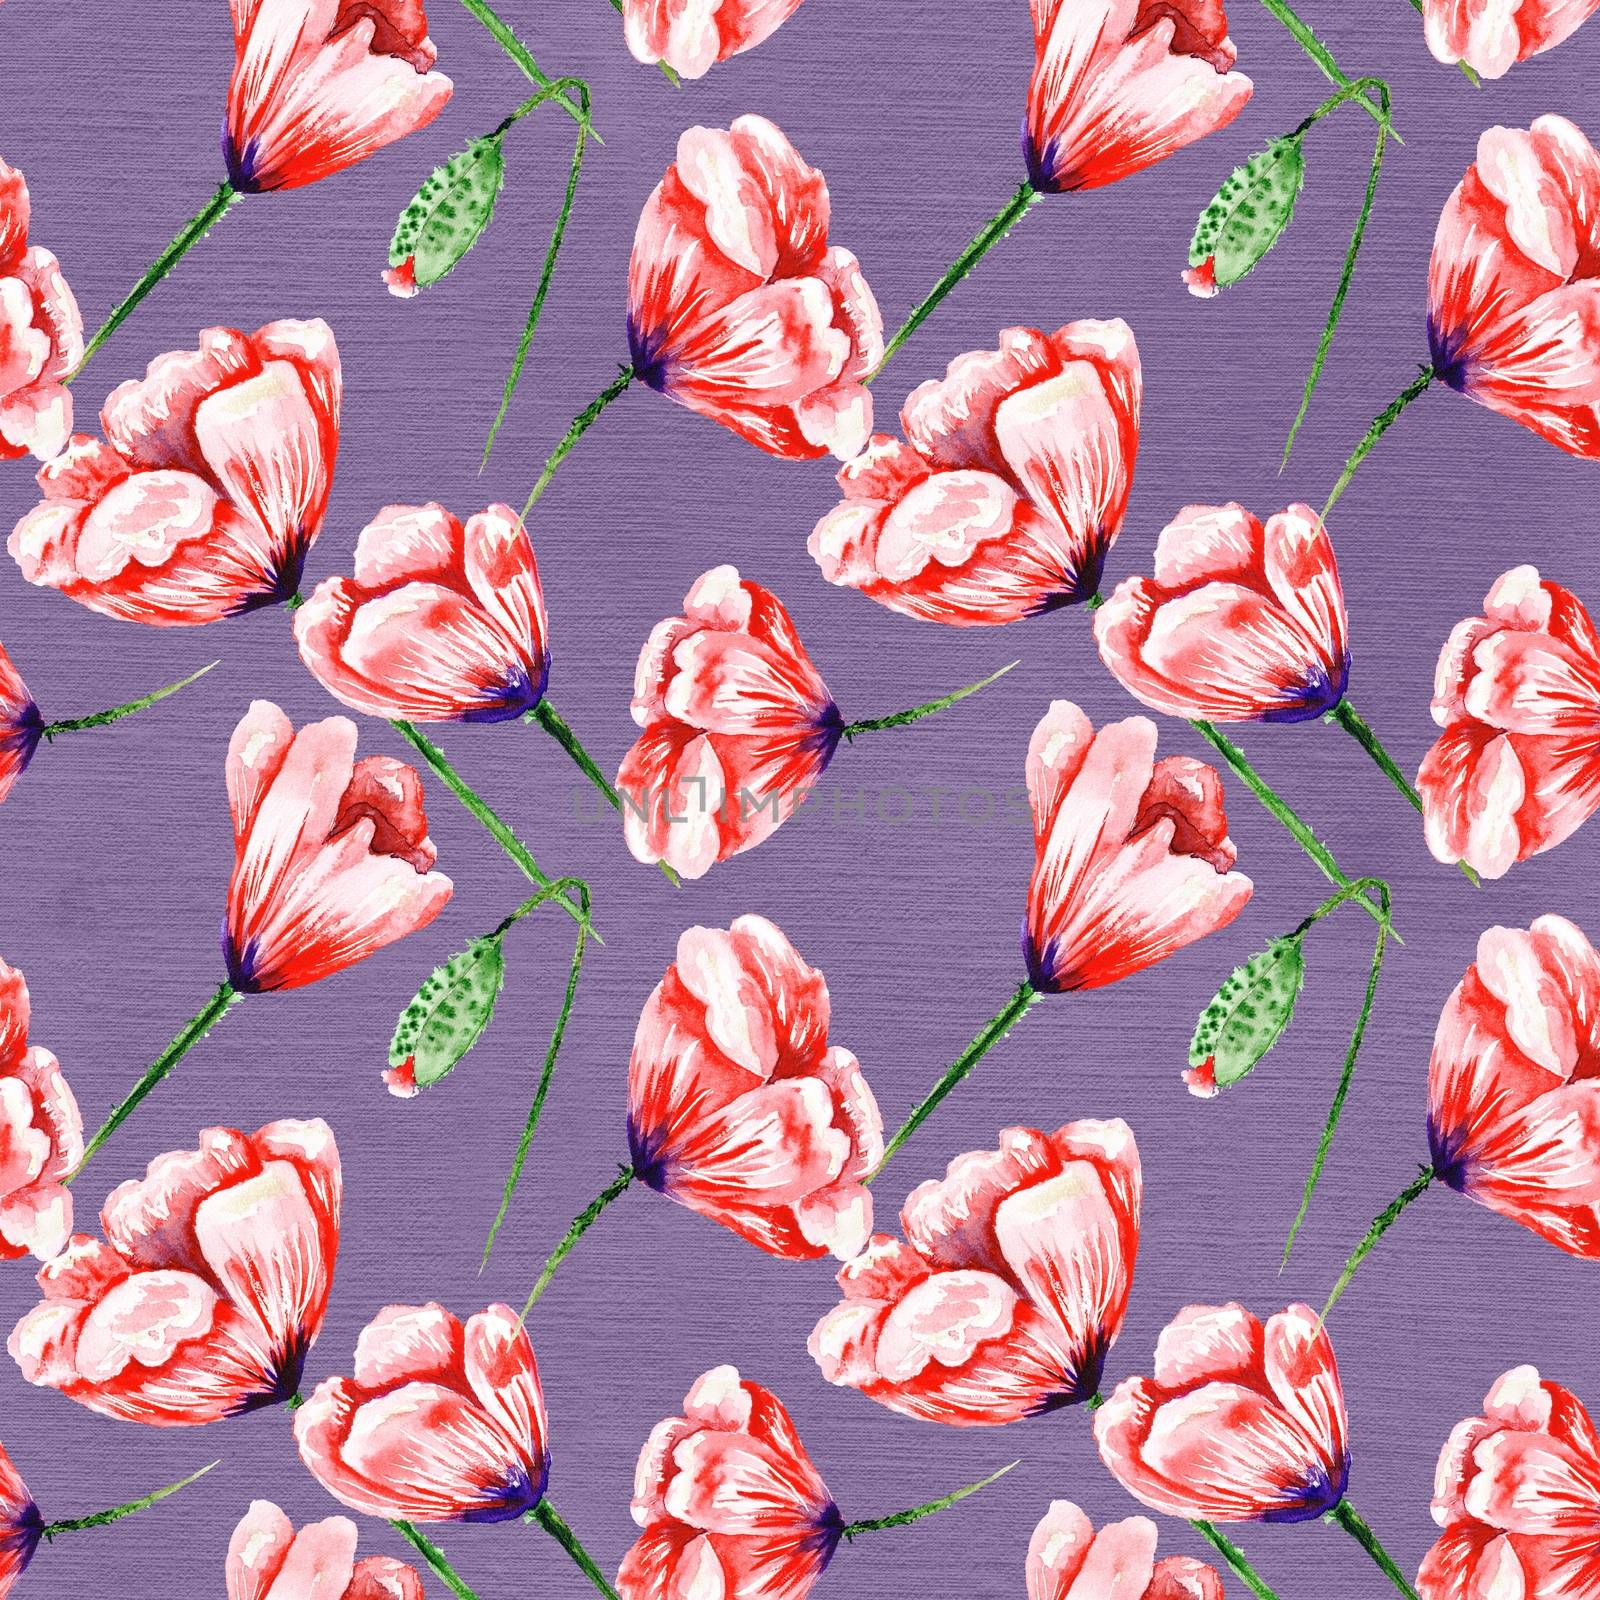 Poppy watercolor pattern on purple background by kisika